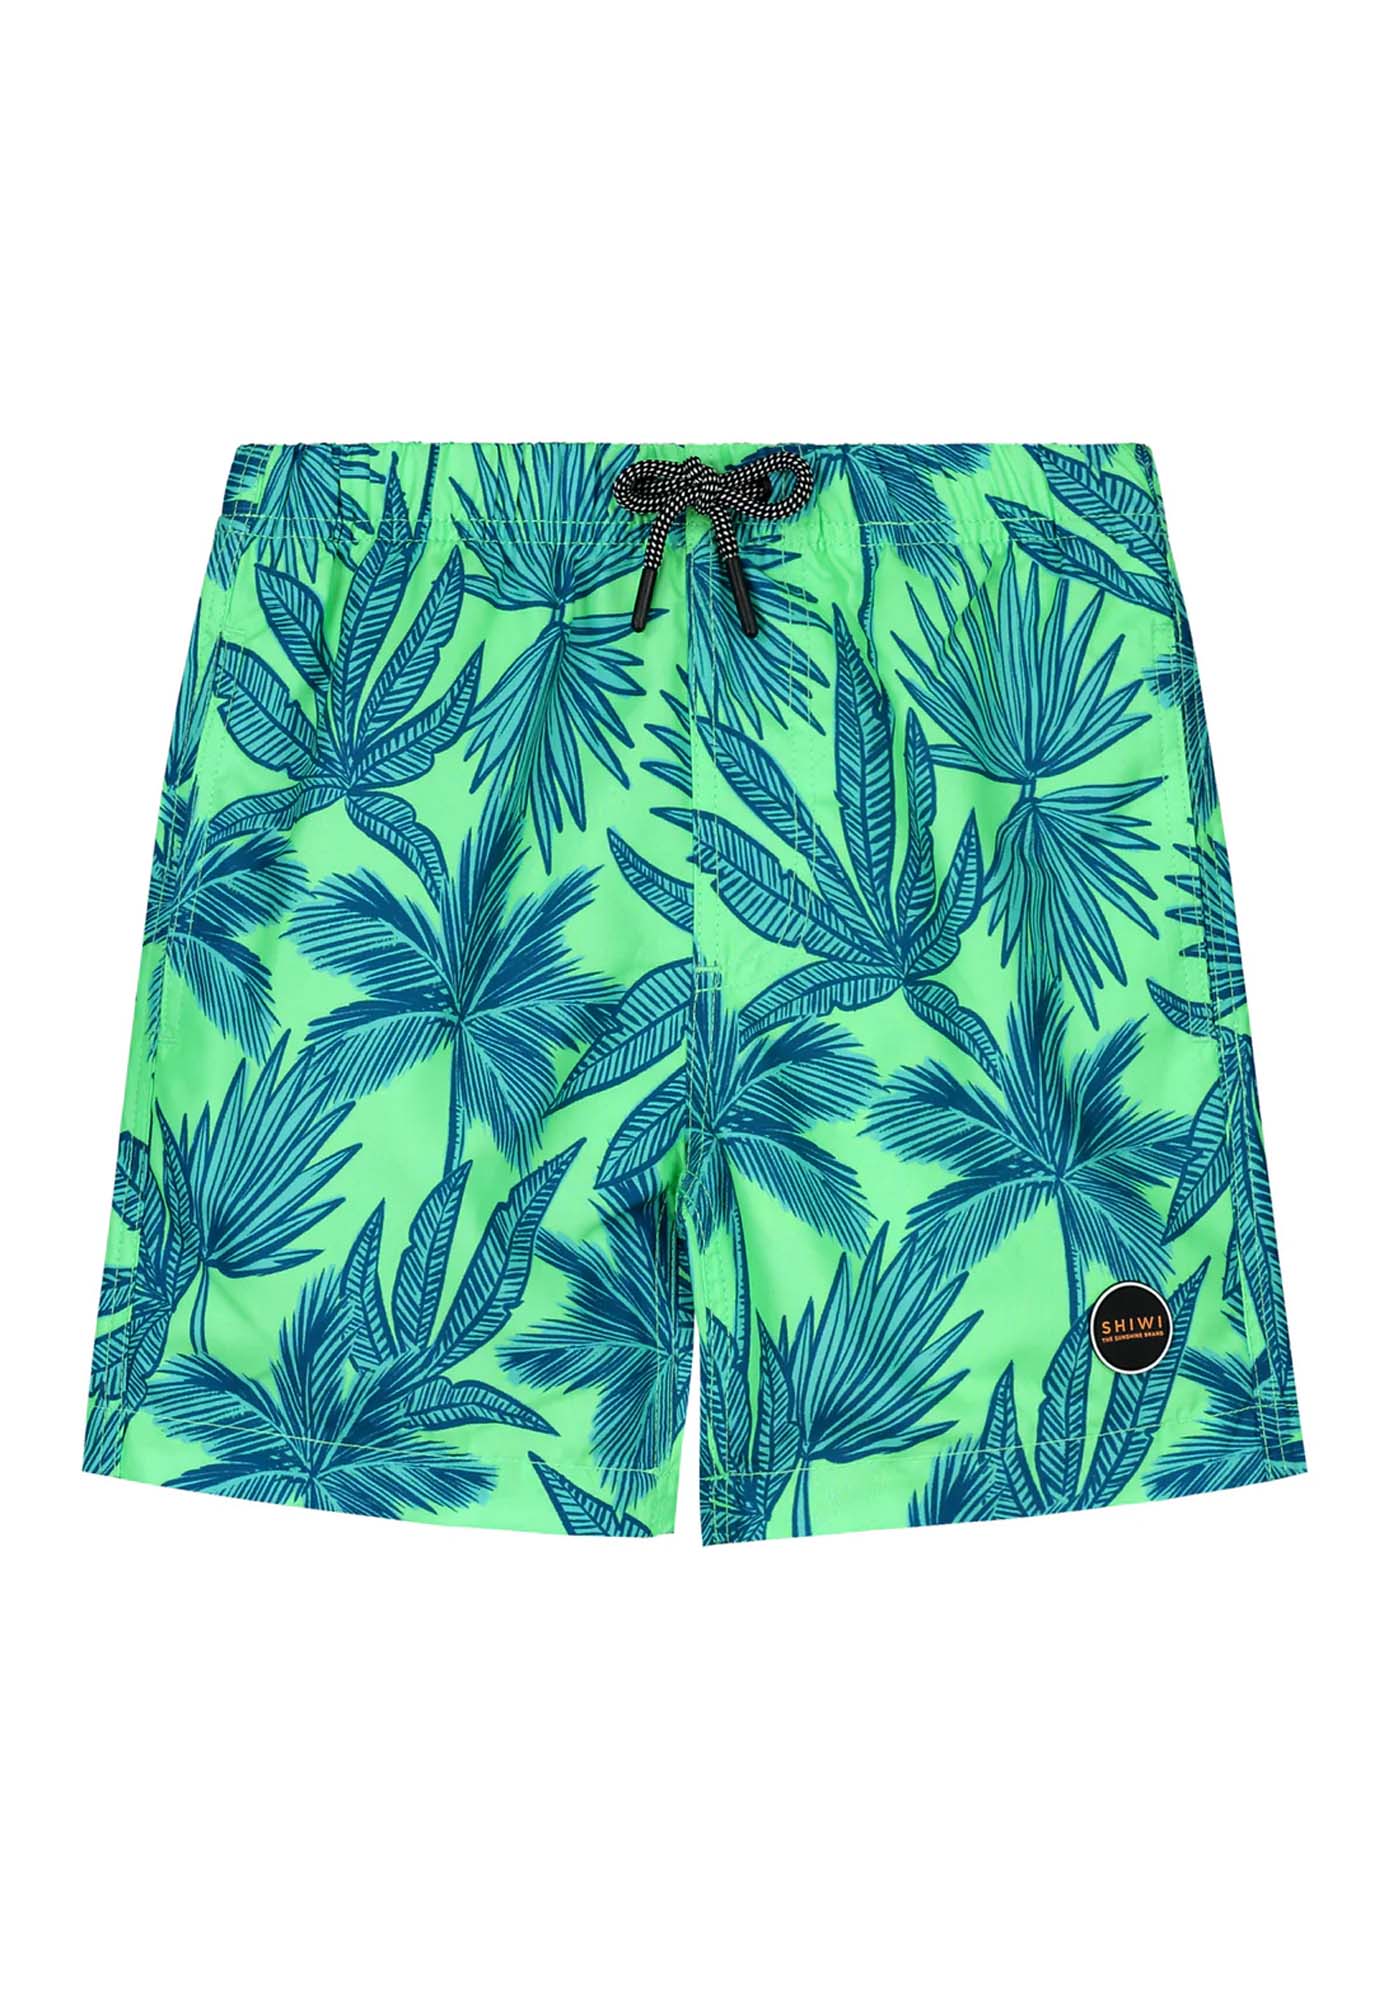 SHIWI Swim Shorts Palm Leaves